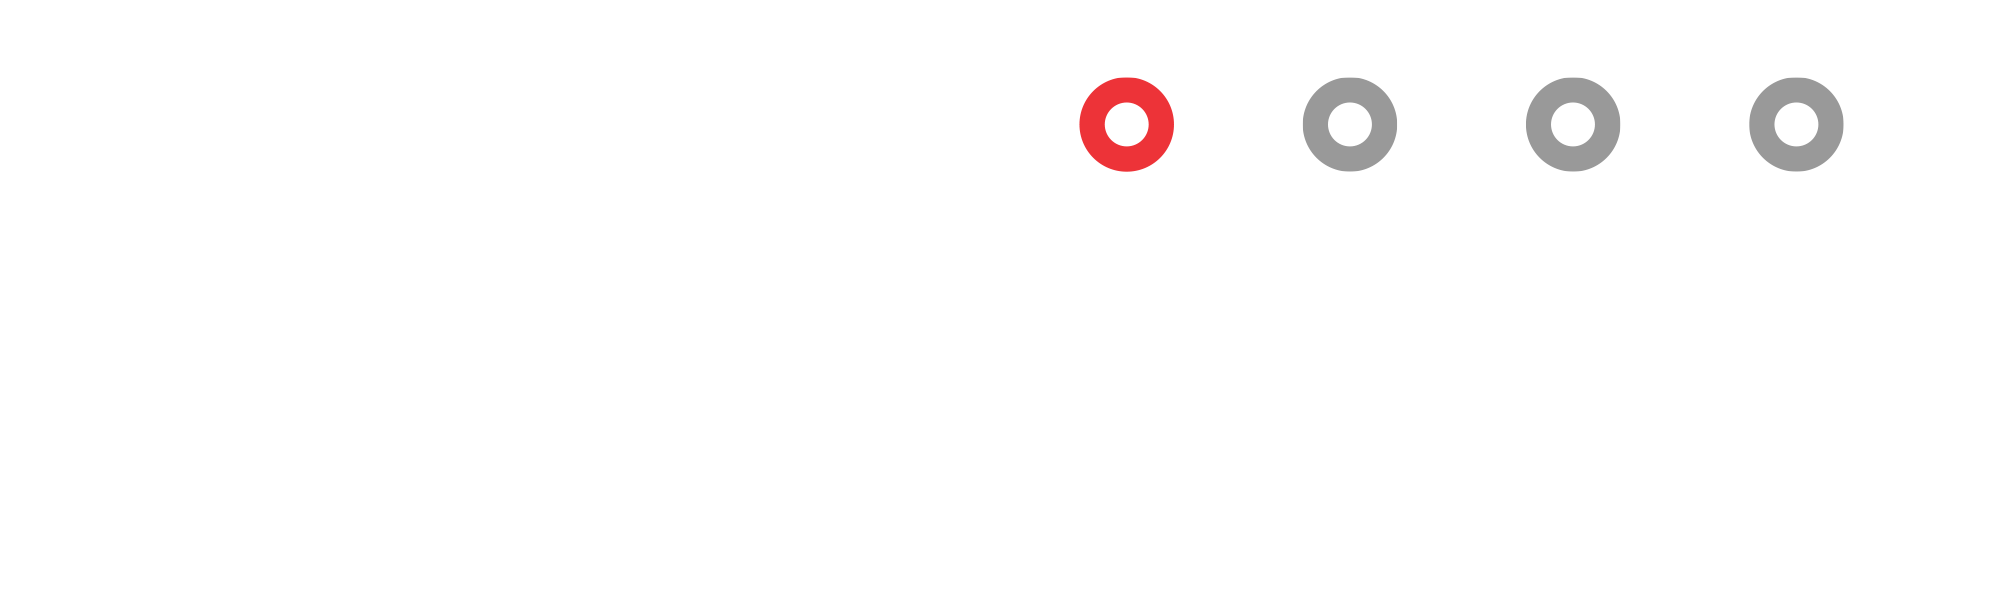 Qualisys logo